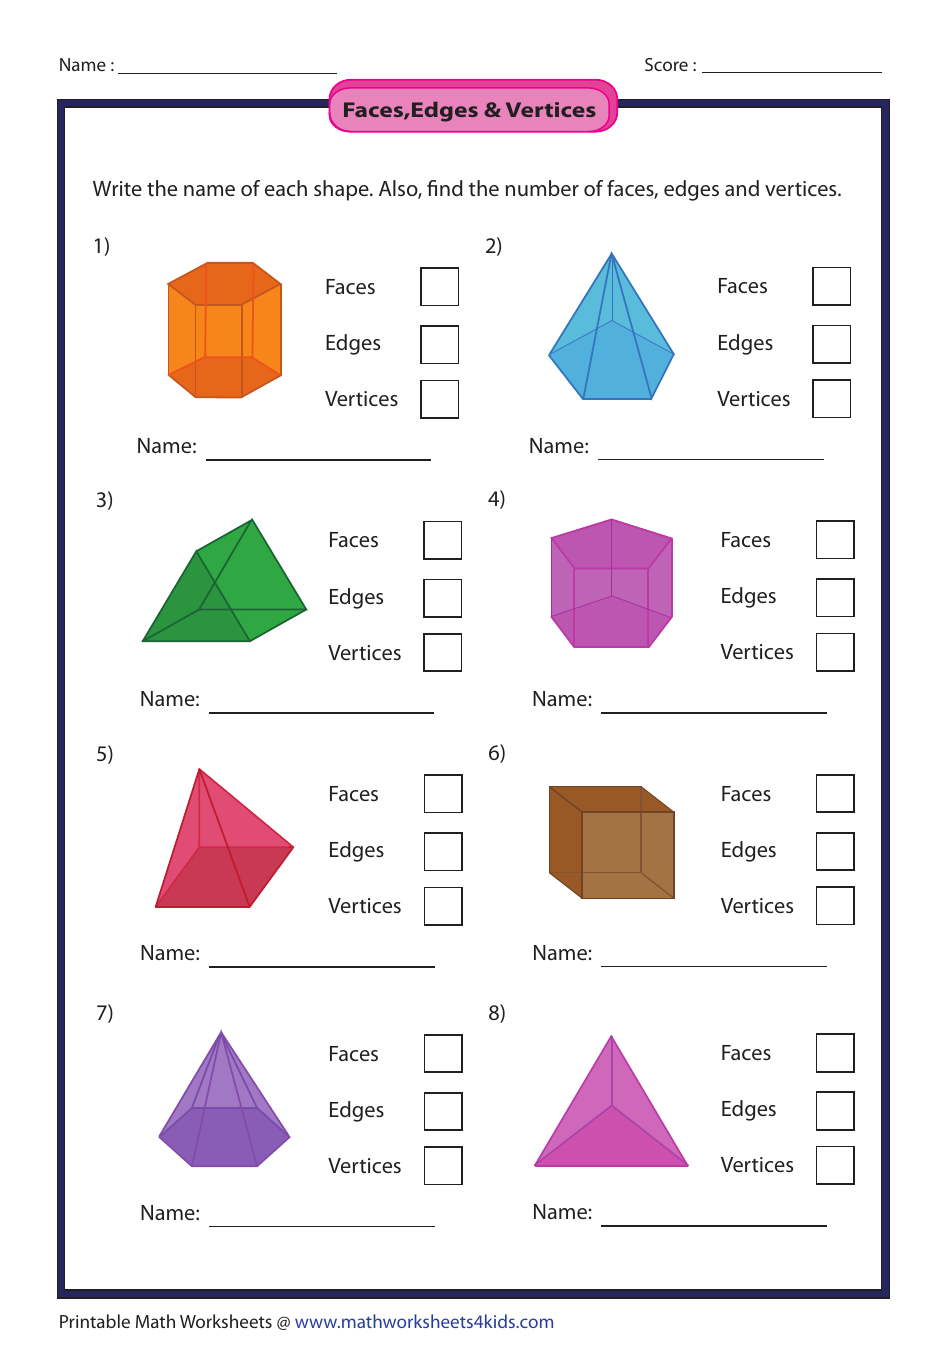 Faces, Edges & Vertices Worksheet